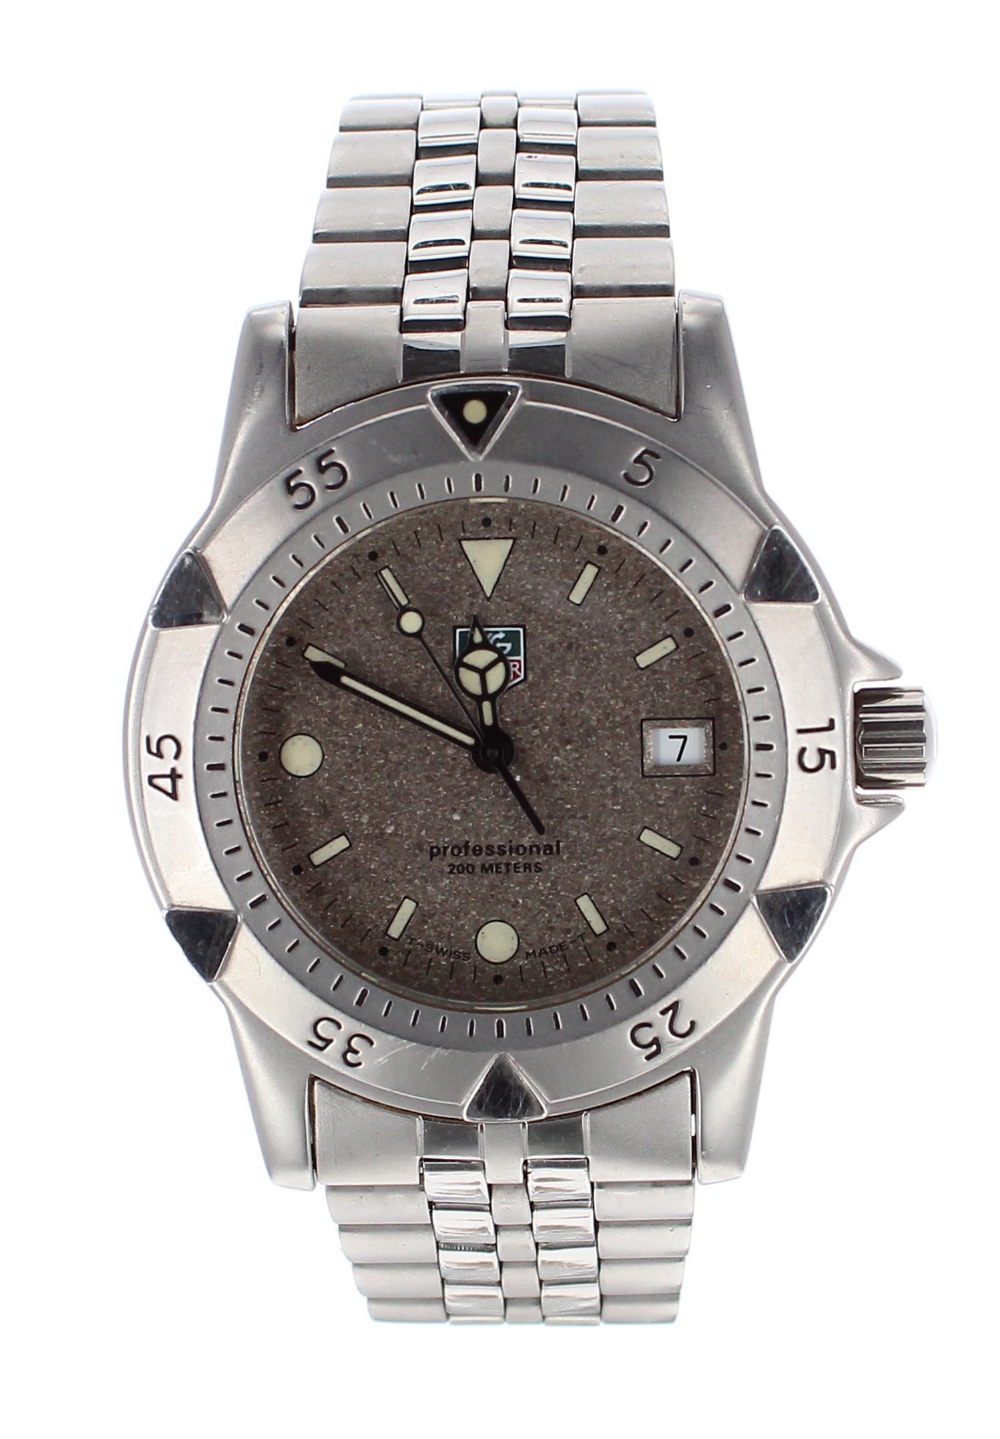 Tag Heuer 1500 Series Professional 200m stainless steel gentleman's wristwatch, ref. WD1211-K-20,